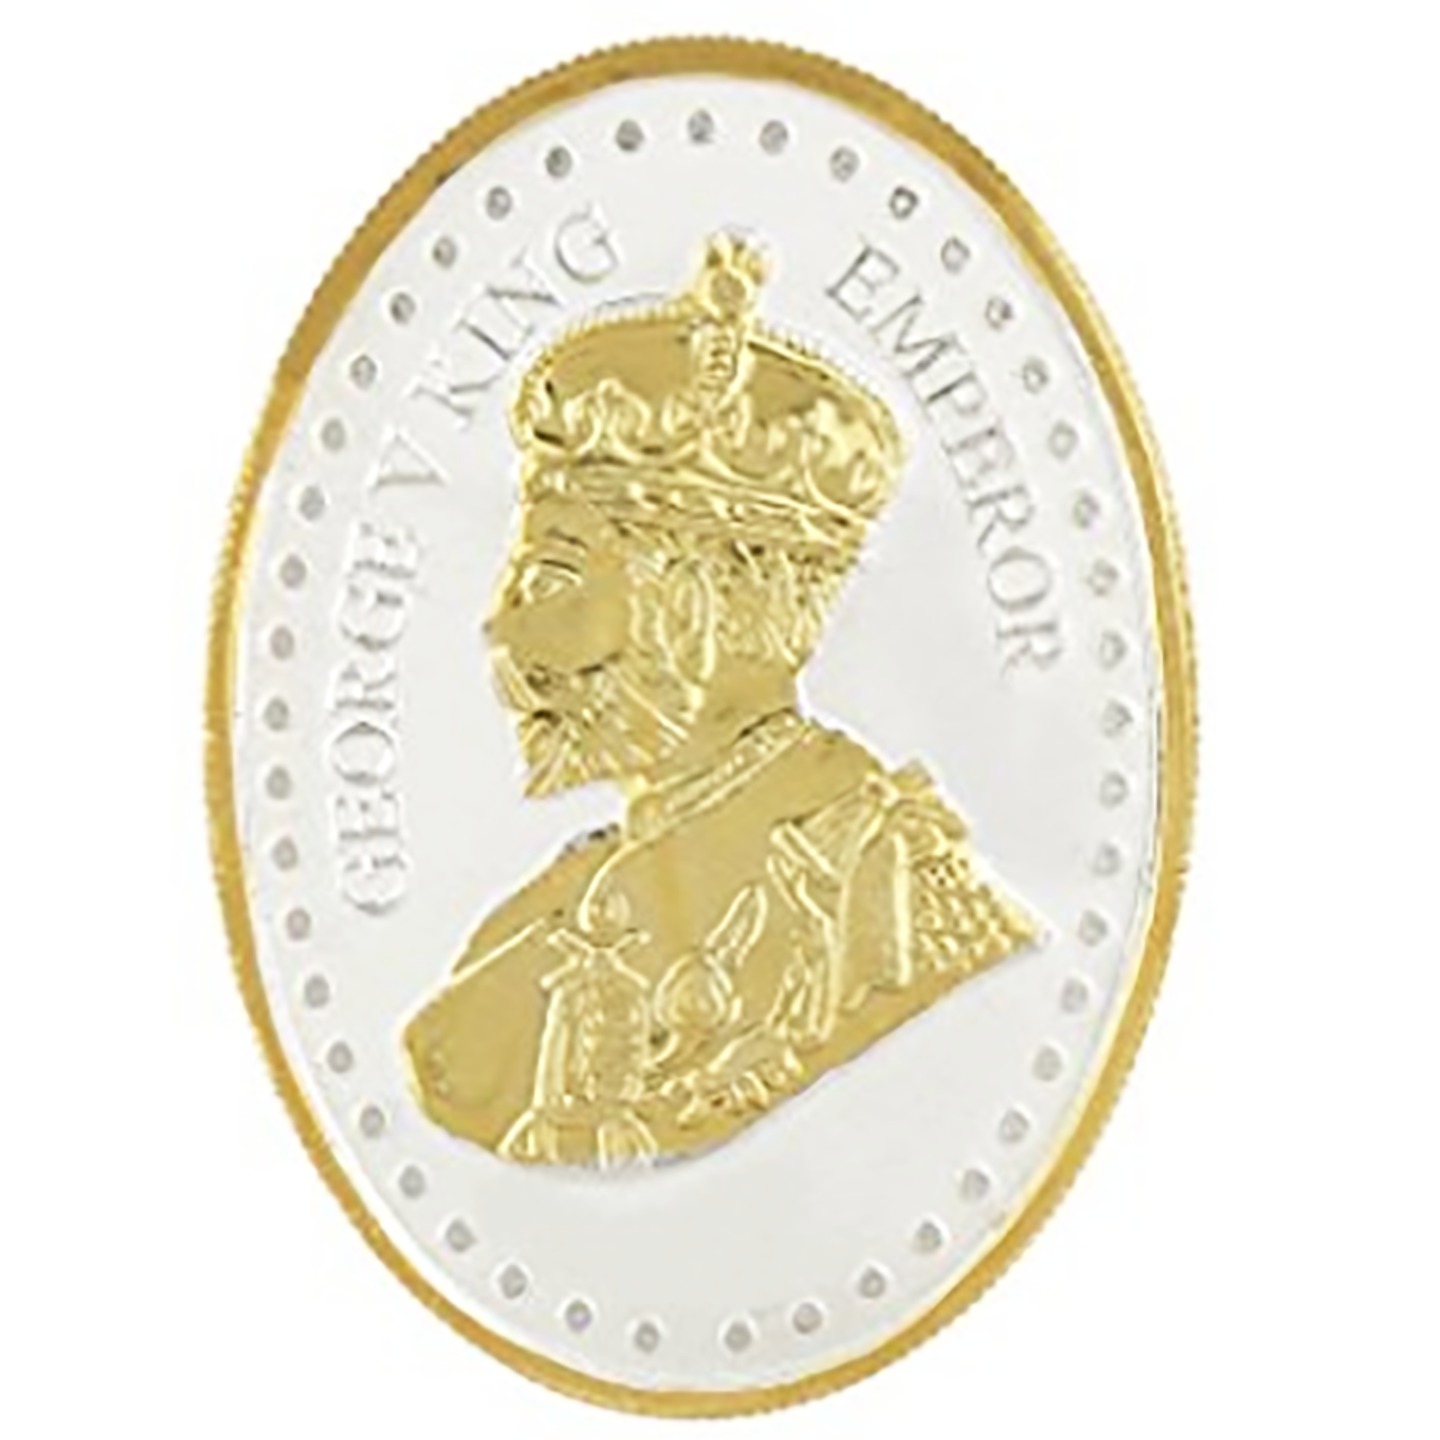 Silver Coin George King V Emperor 24 Kt Gold Plated 20 Gm 999 BIS Hallmarked